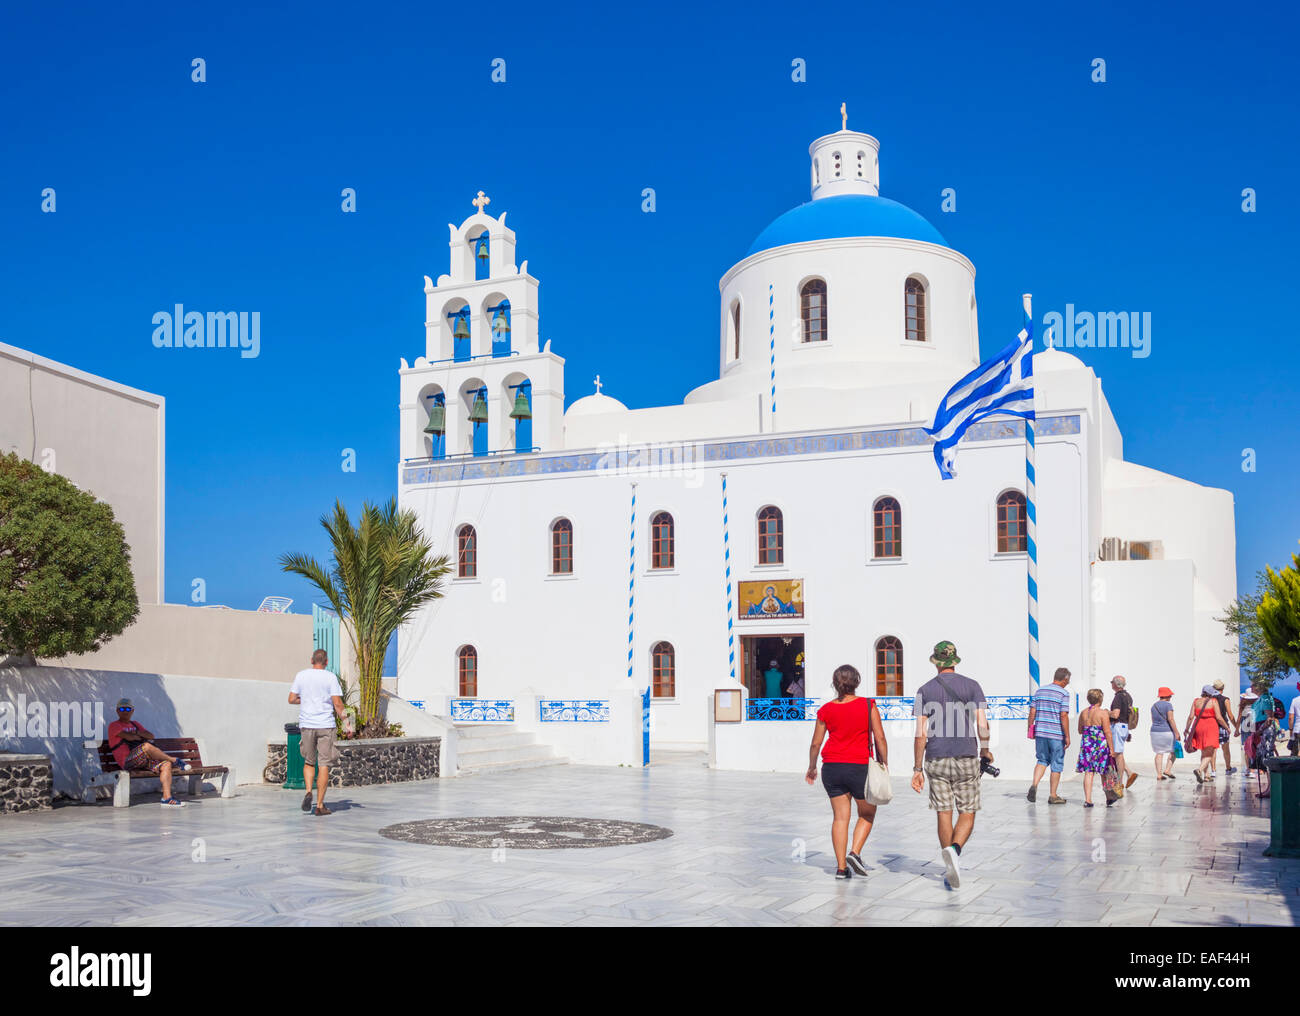 Bue-Kuppel und Glockenturm Turm der griechischen Kirche Panagia Platsani Oia Santorini Thira Kykladen Inseln griechische Inseln Griechenland Europa Stockfoto